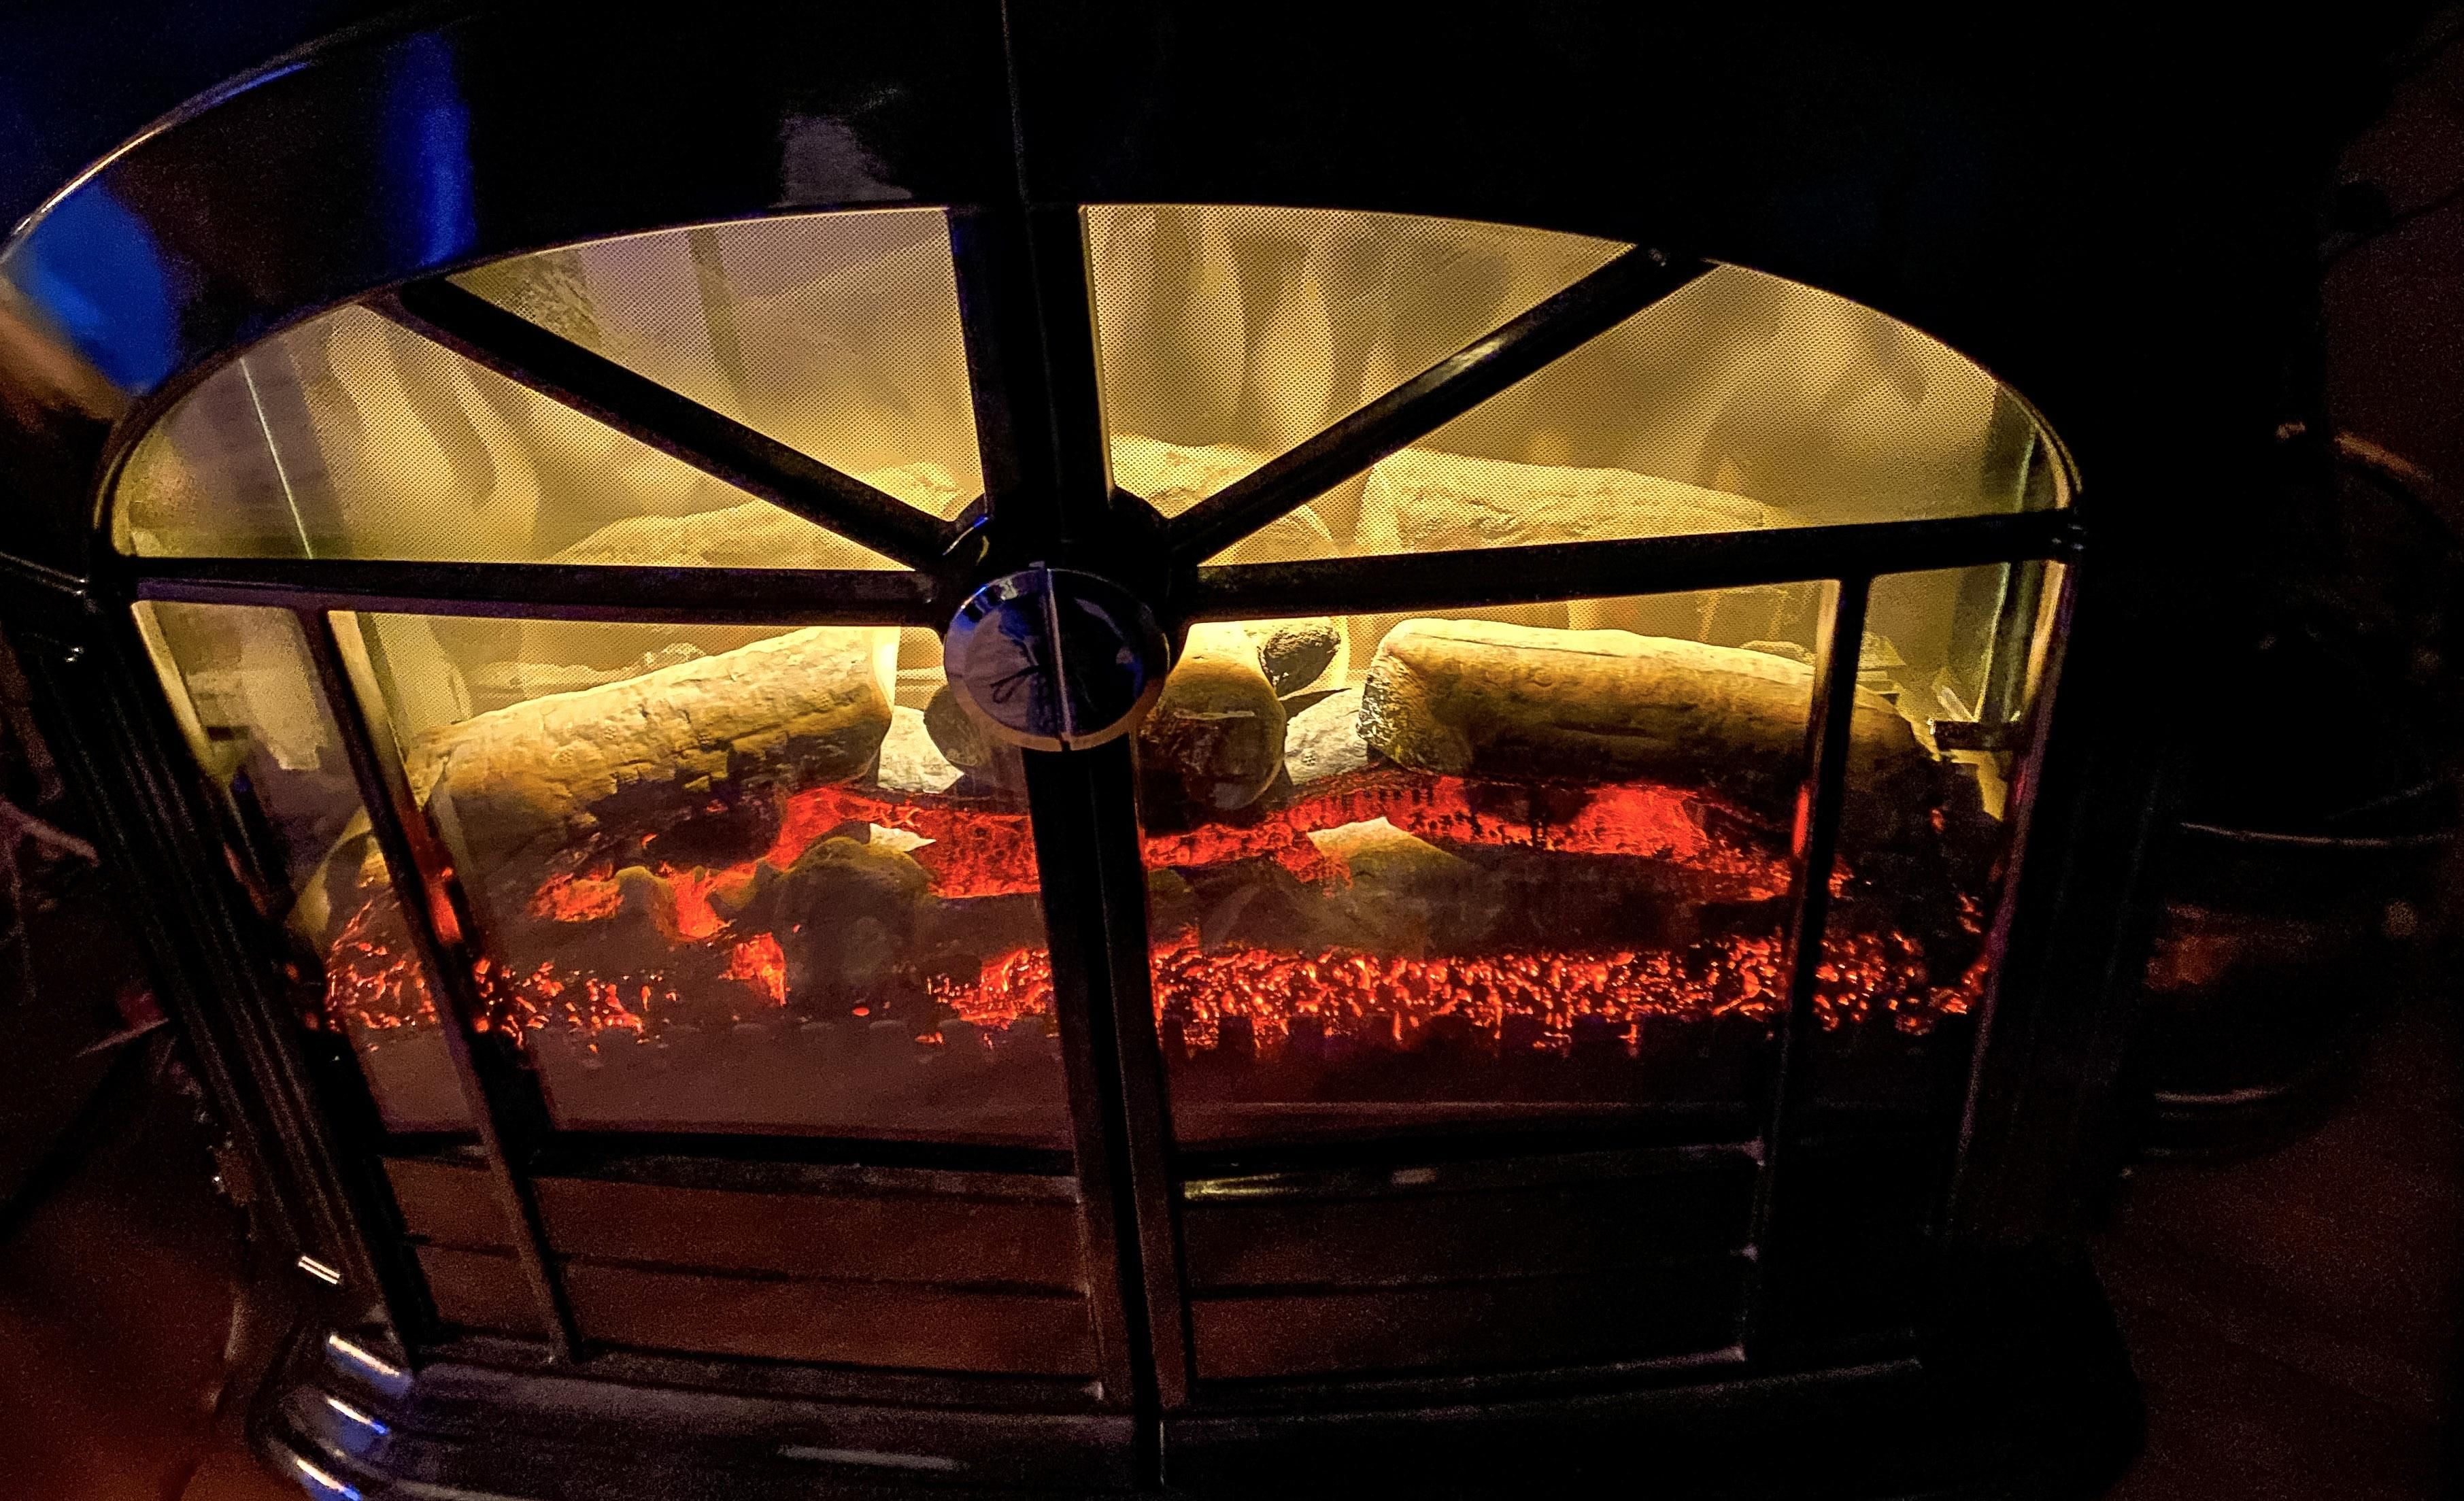 A close up of an electric log burner